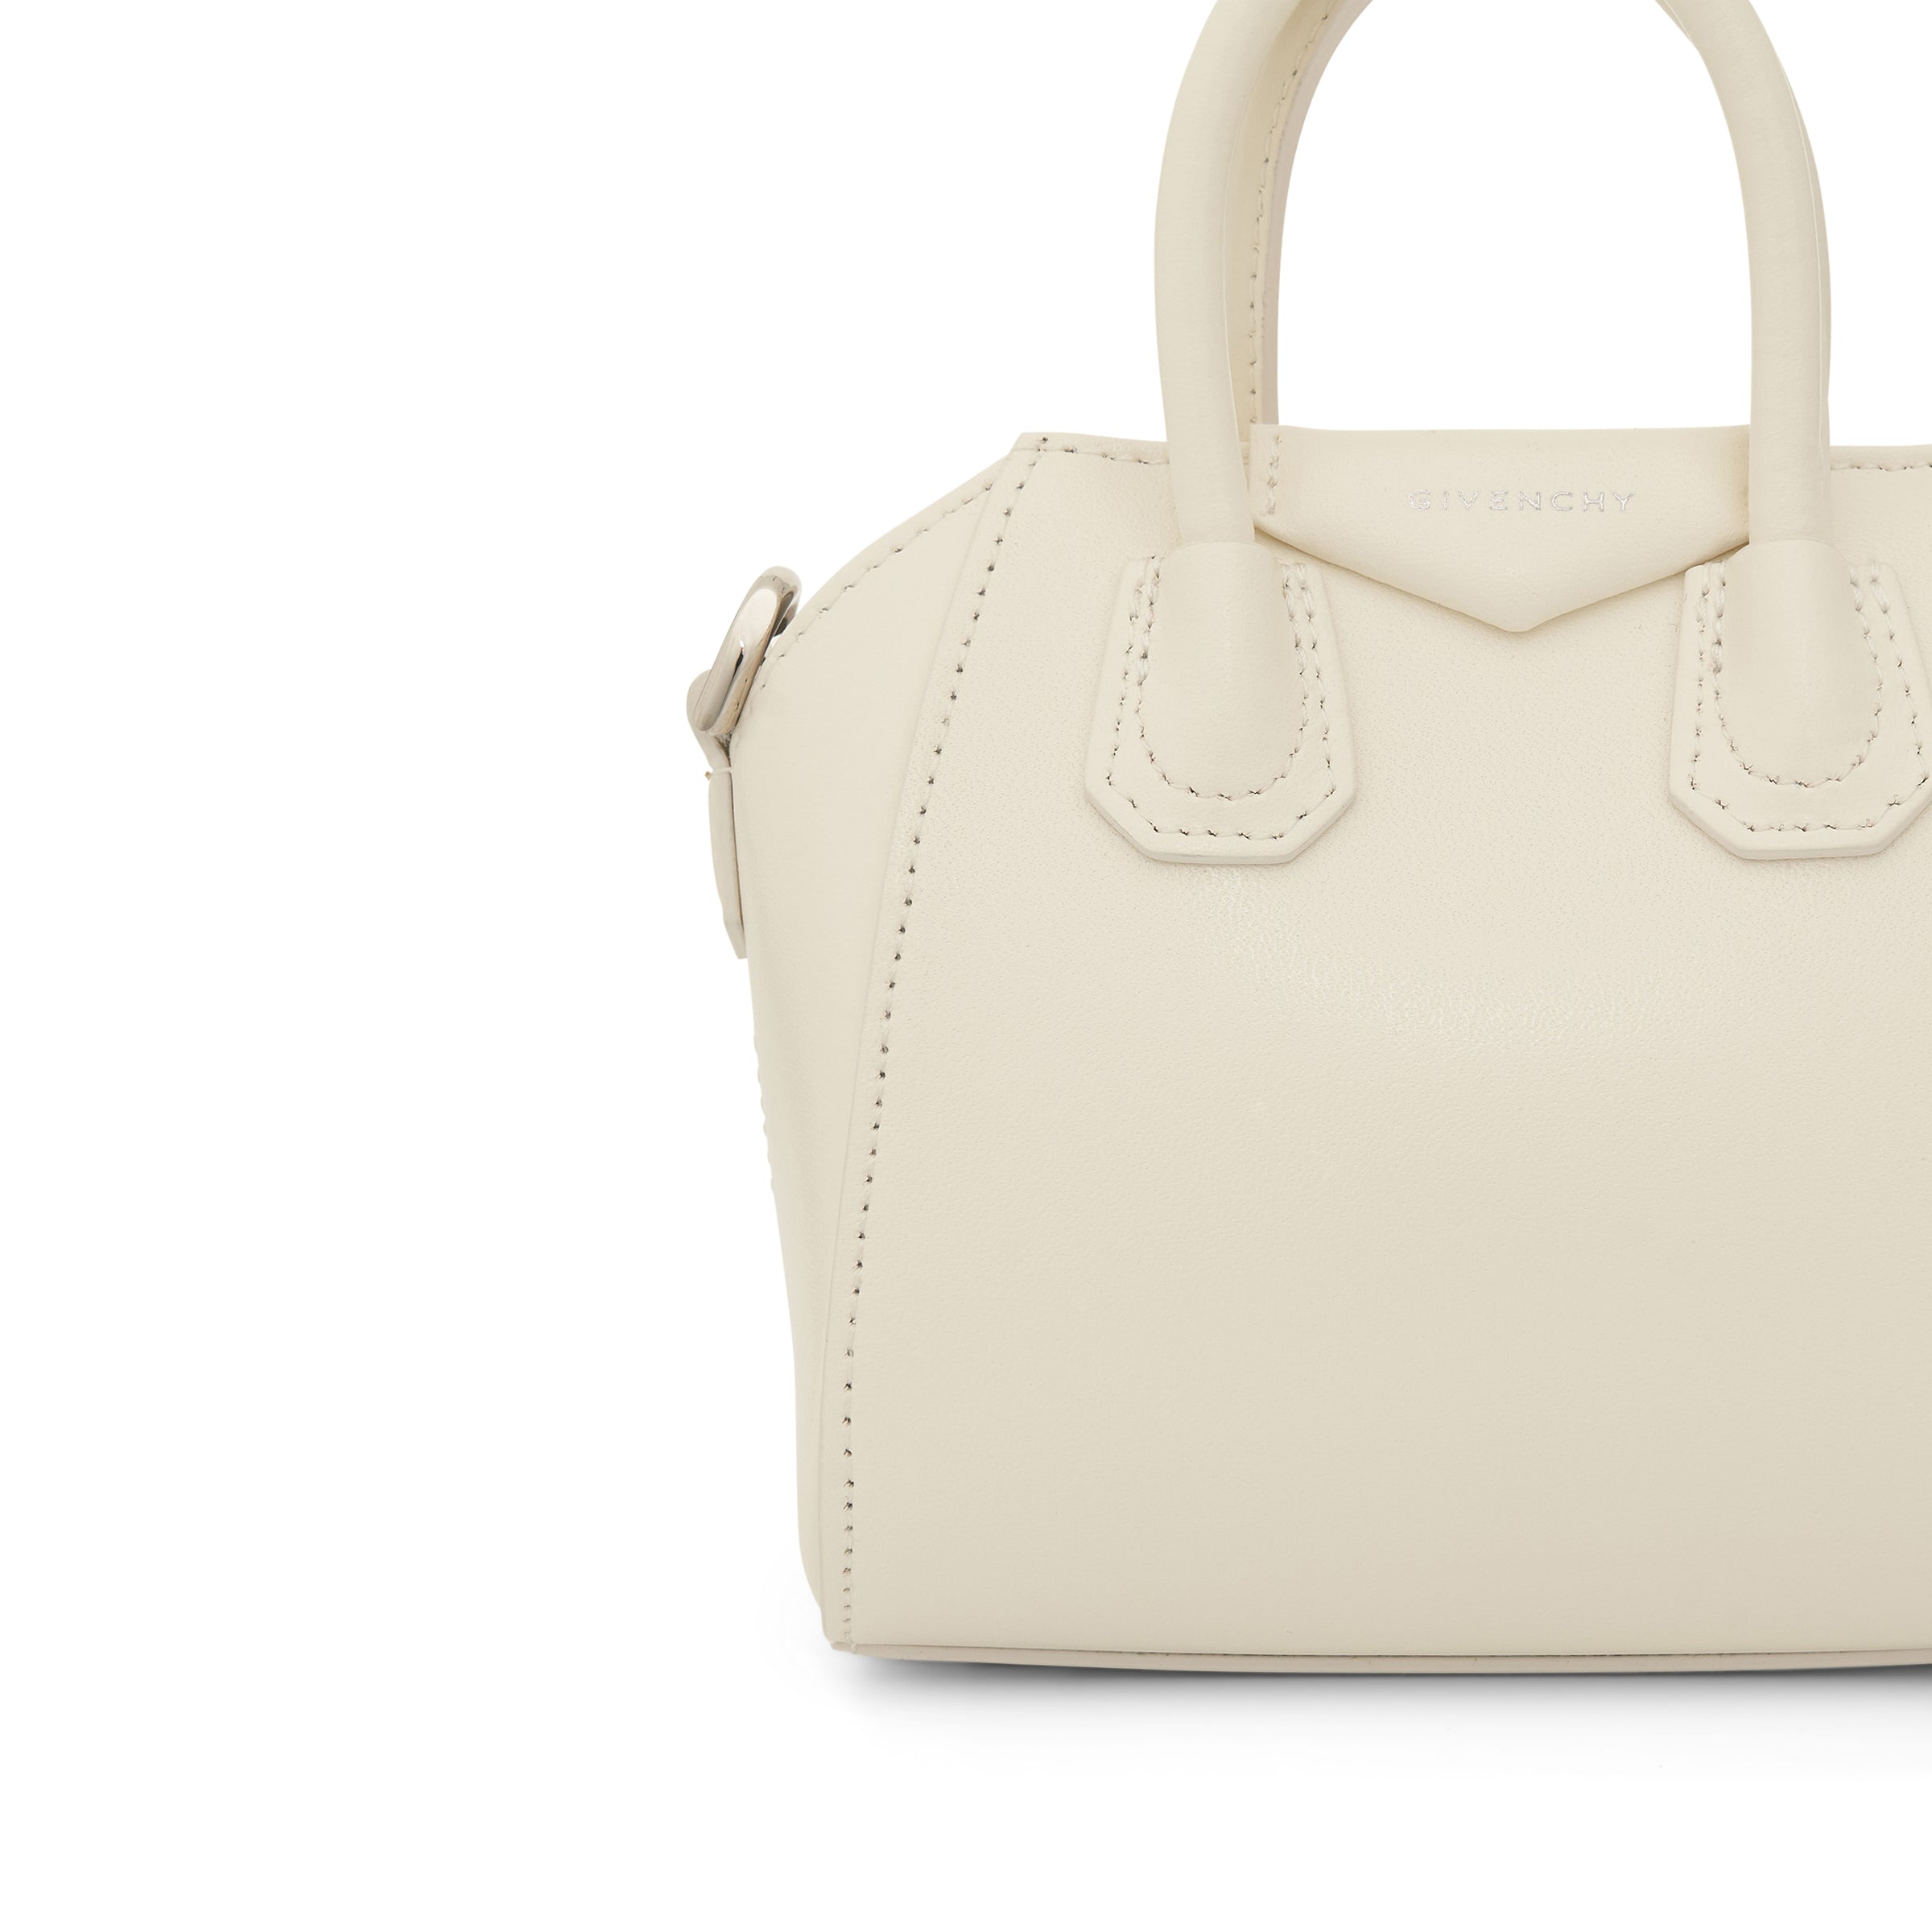 Givenchy Micro Antigona Bag in Ivory